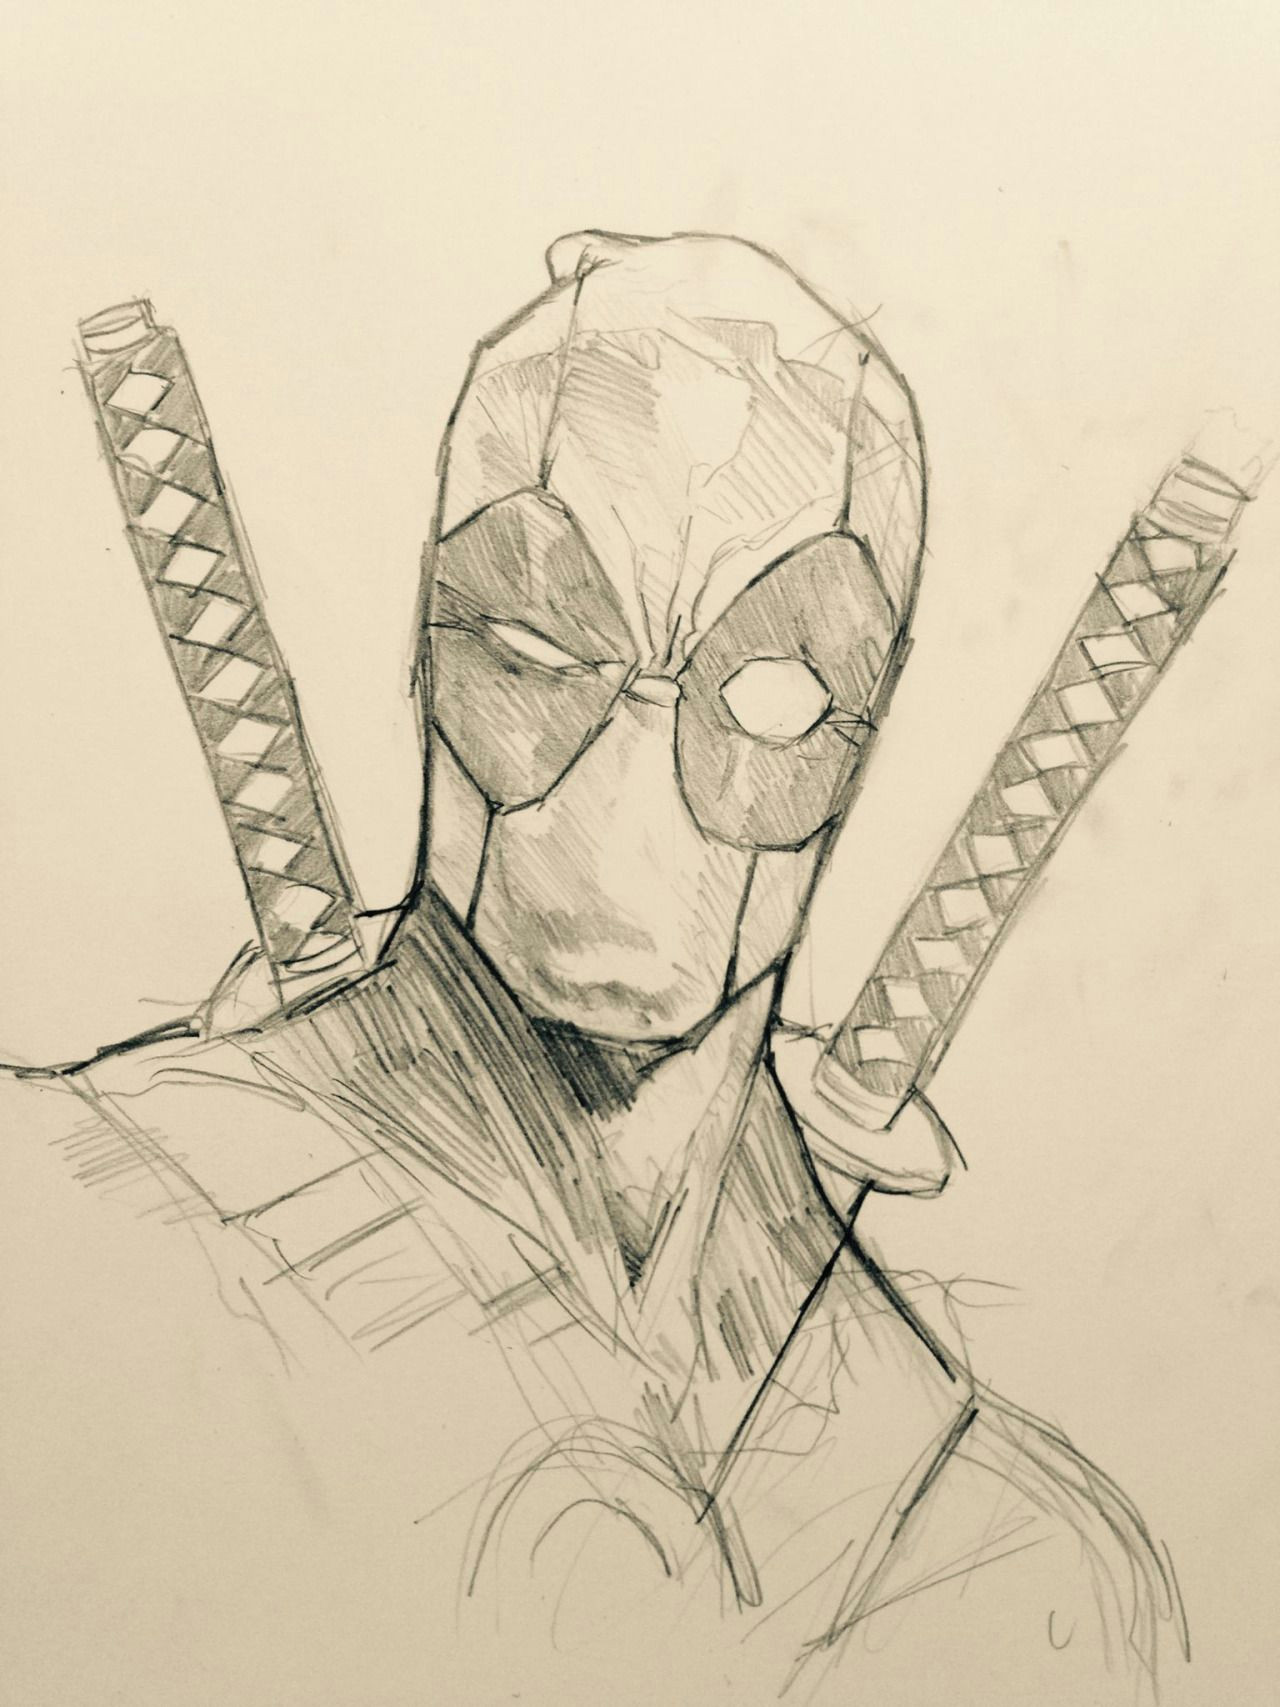 Drawing A Cartoon Superhero Dave Seguin Photo Drawing S Pinterest Drawings Pencil